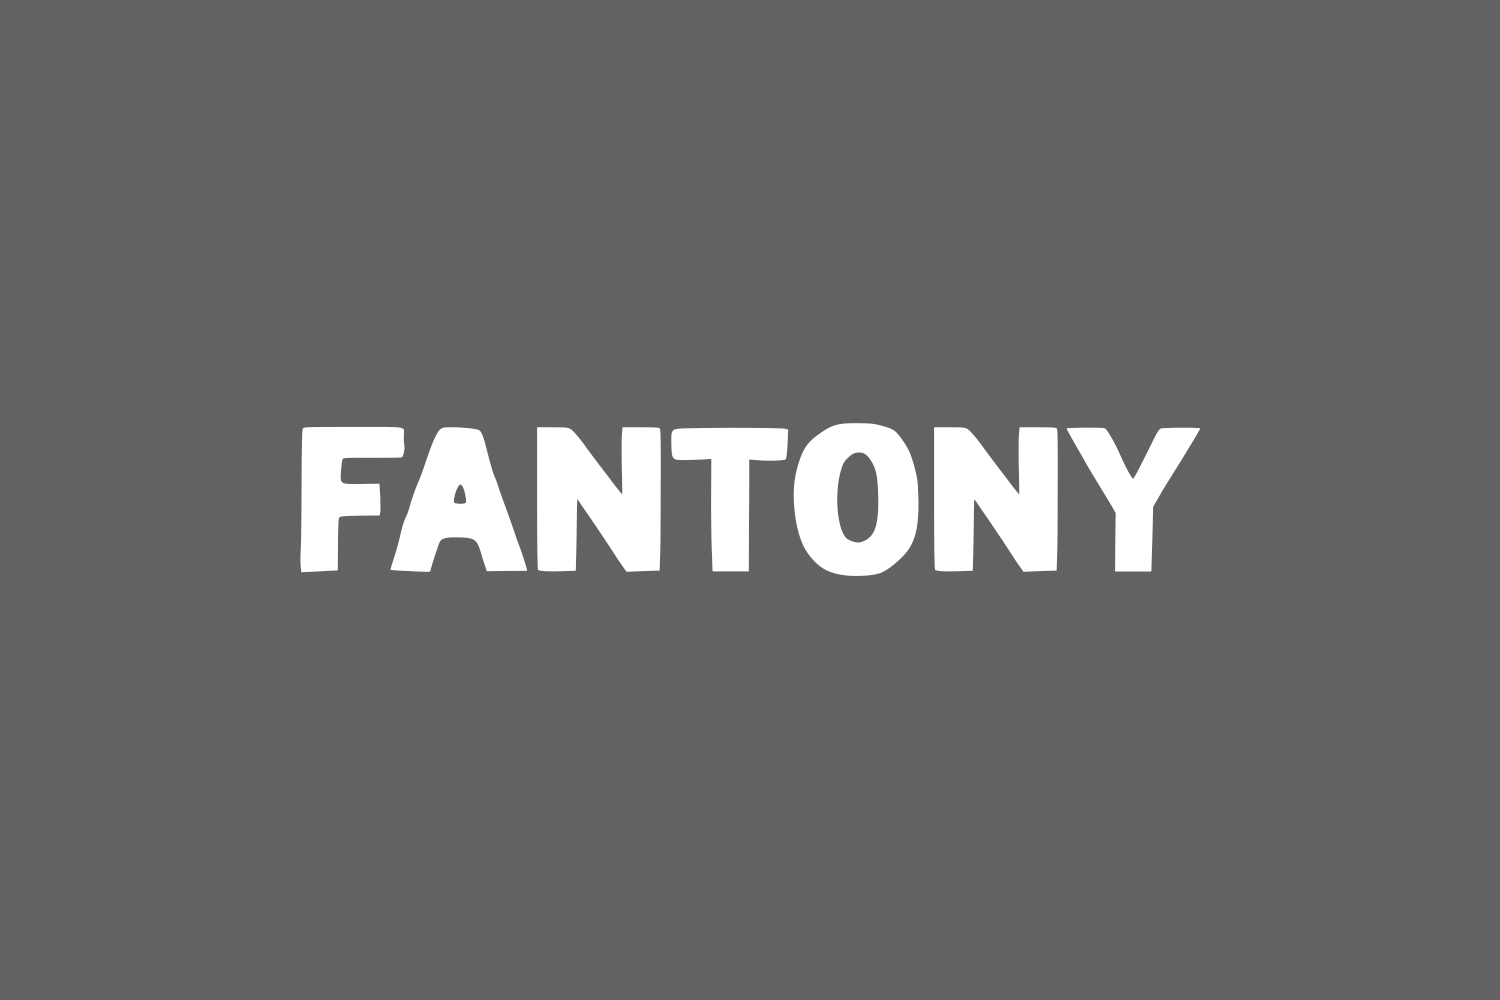 Fantony Free Font